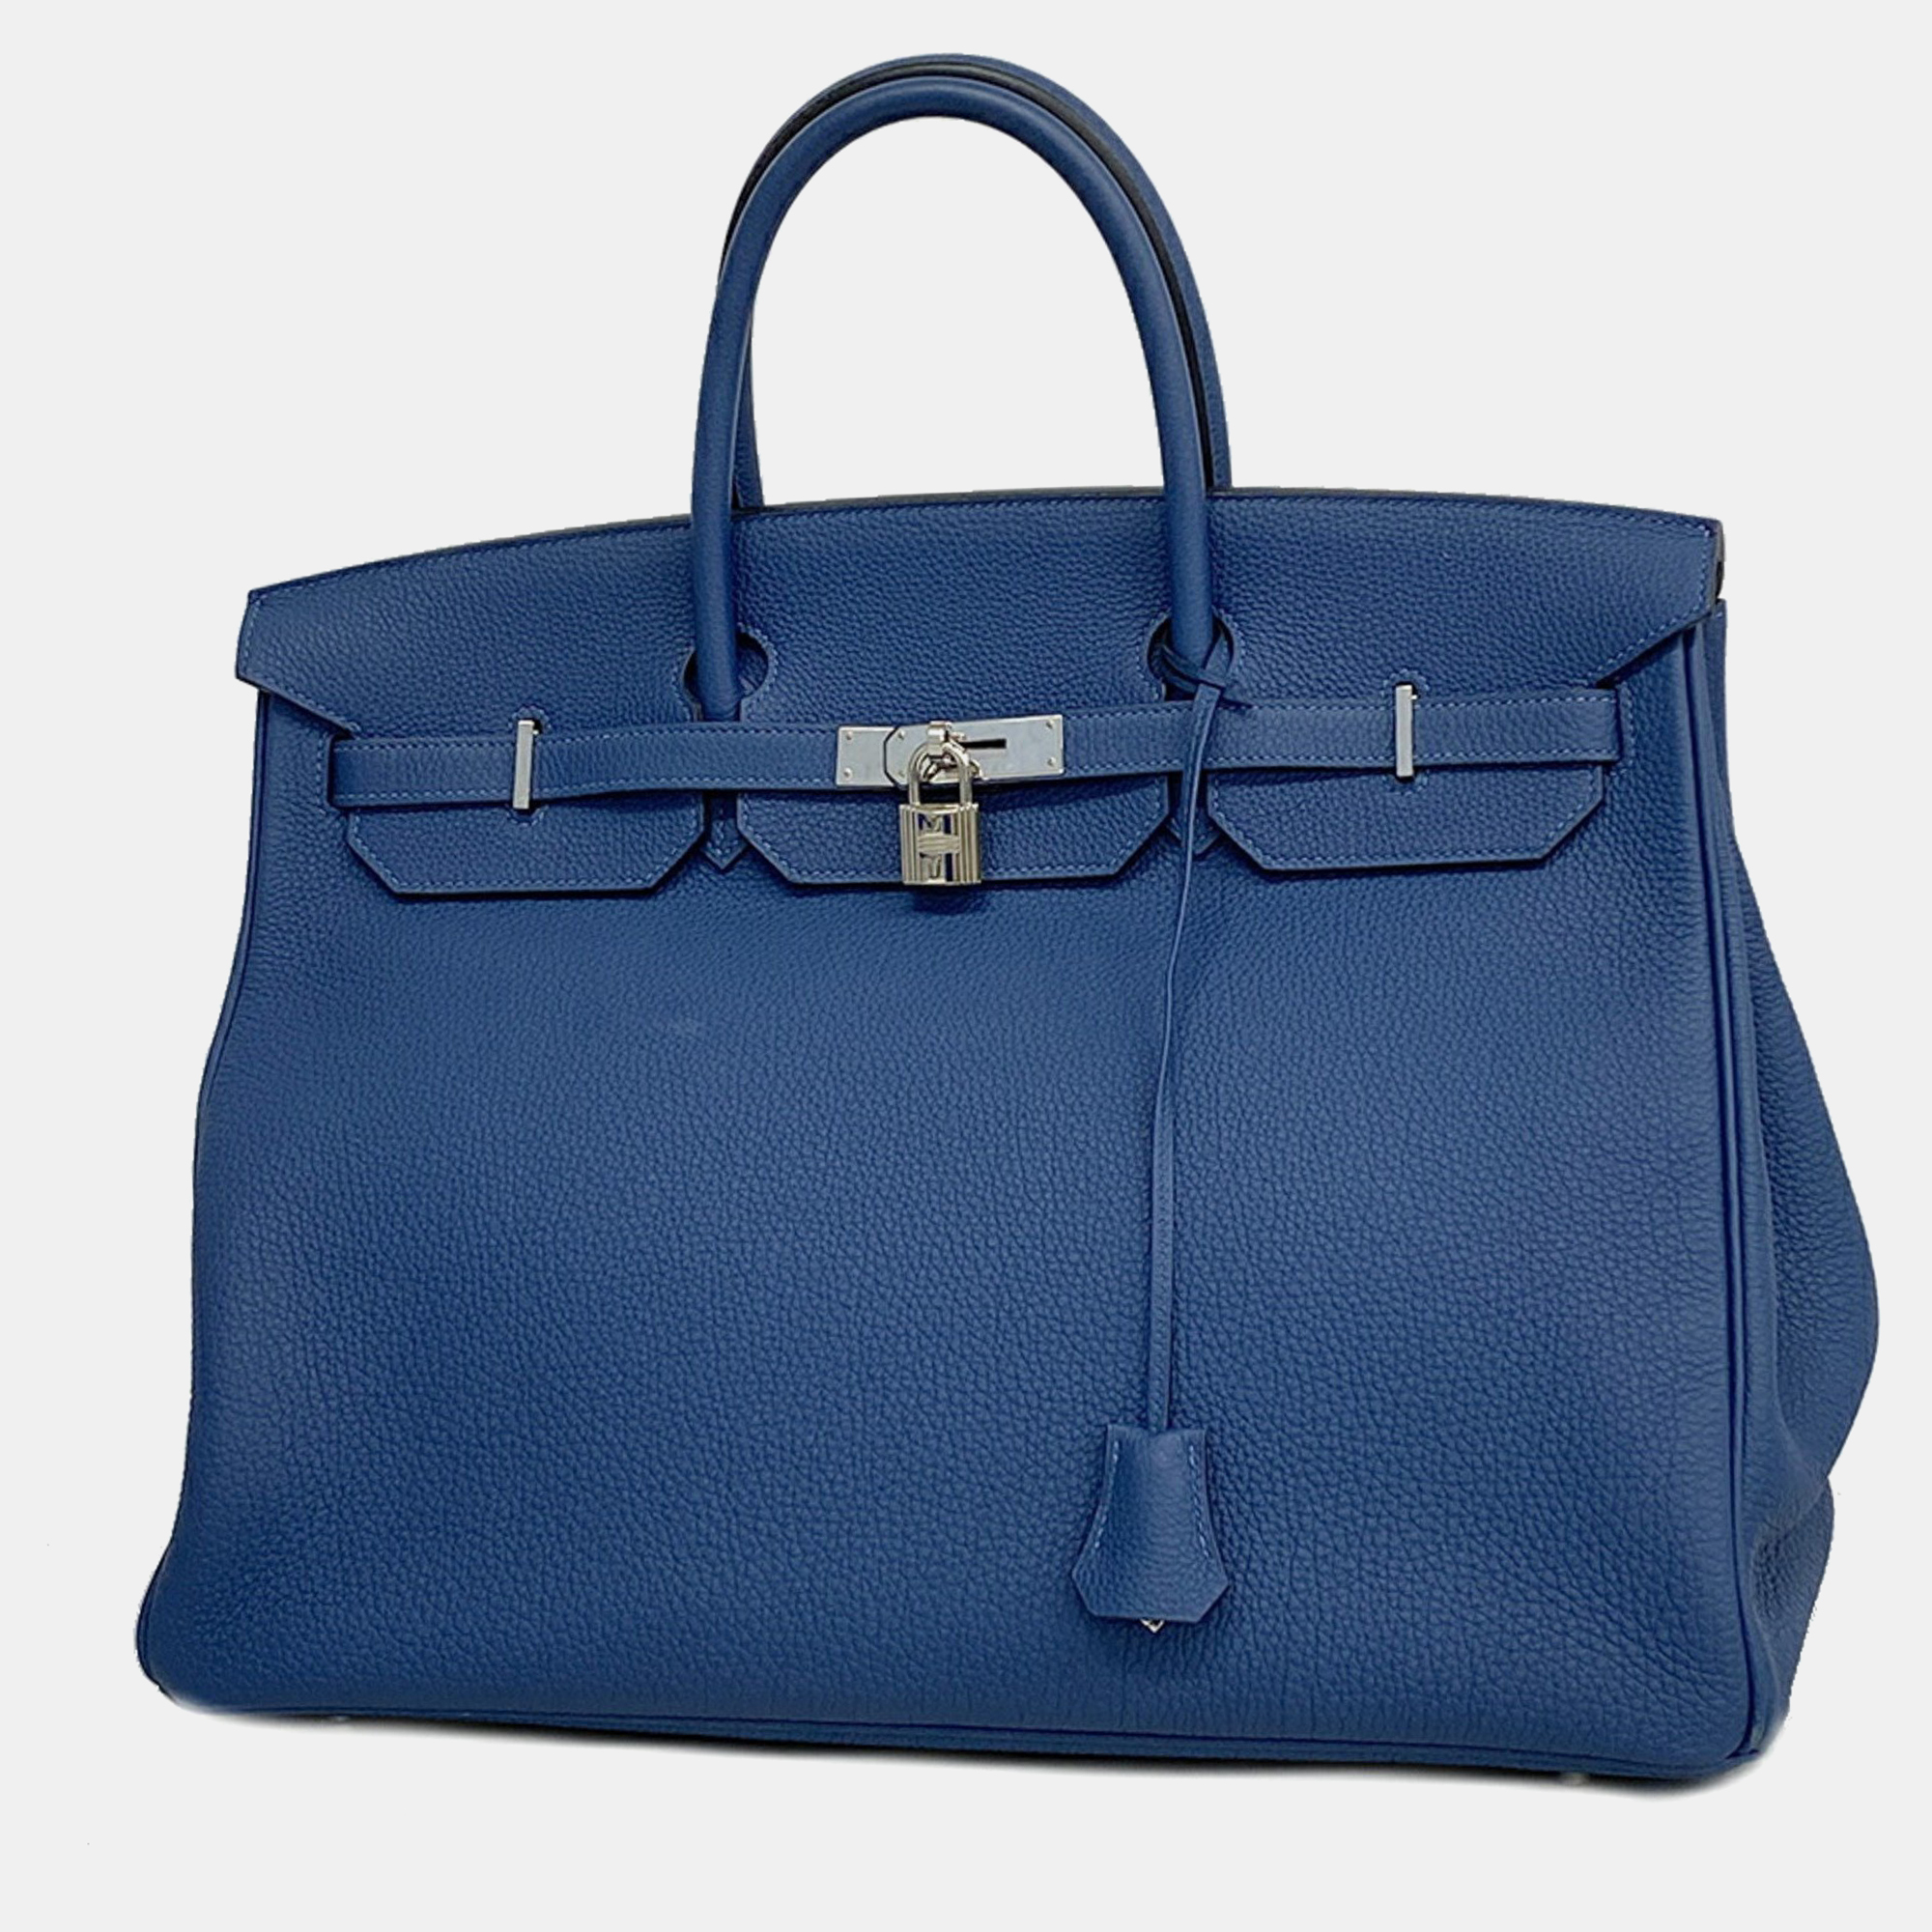 Pre-owned Hermes Blue De Malte Togo Birkin Engraved Handbag